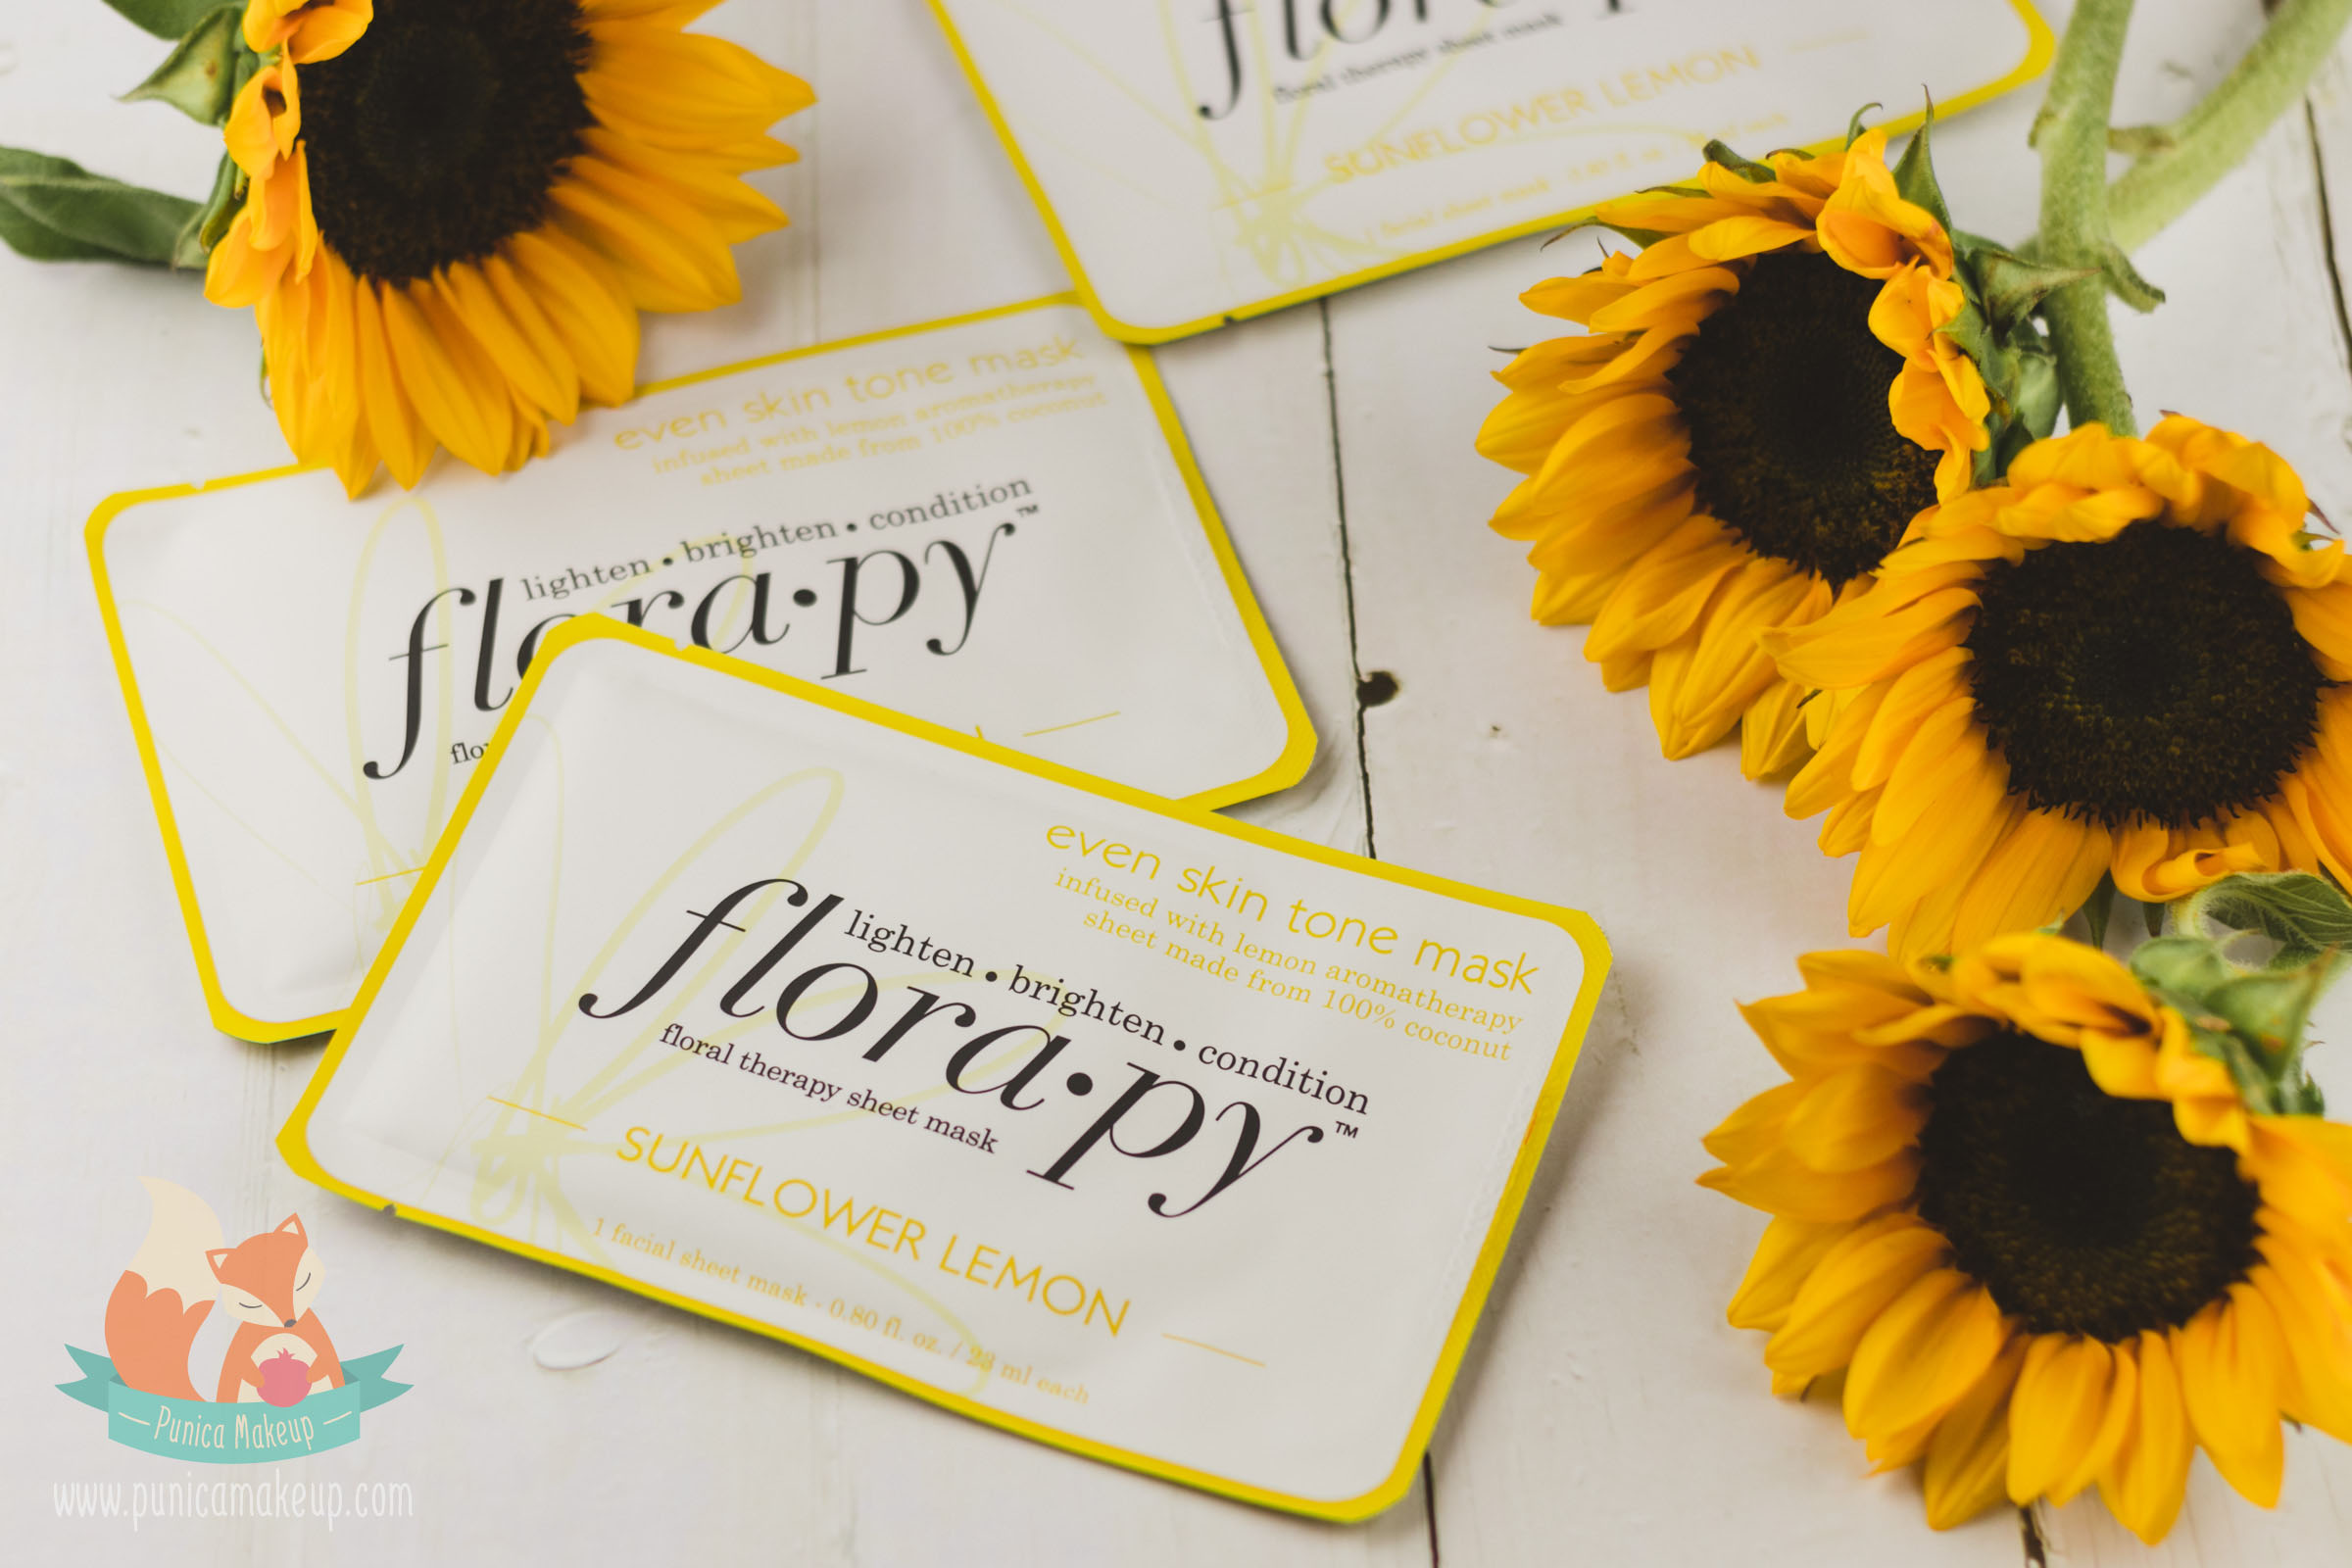 Review: Florapy Beauty – Even Skin Tone Sheet Mask (Sunflower Lemon)